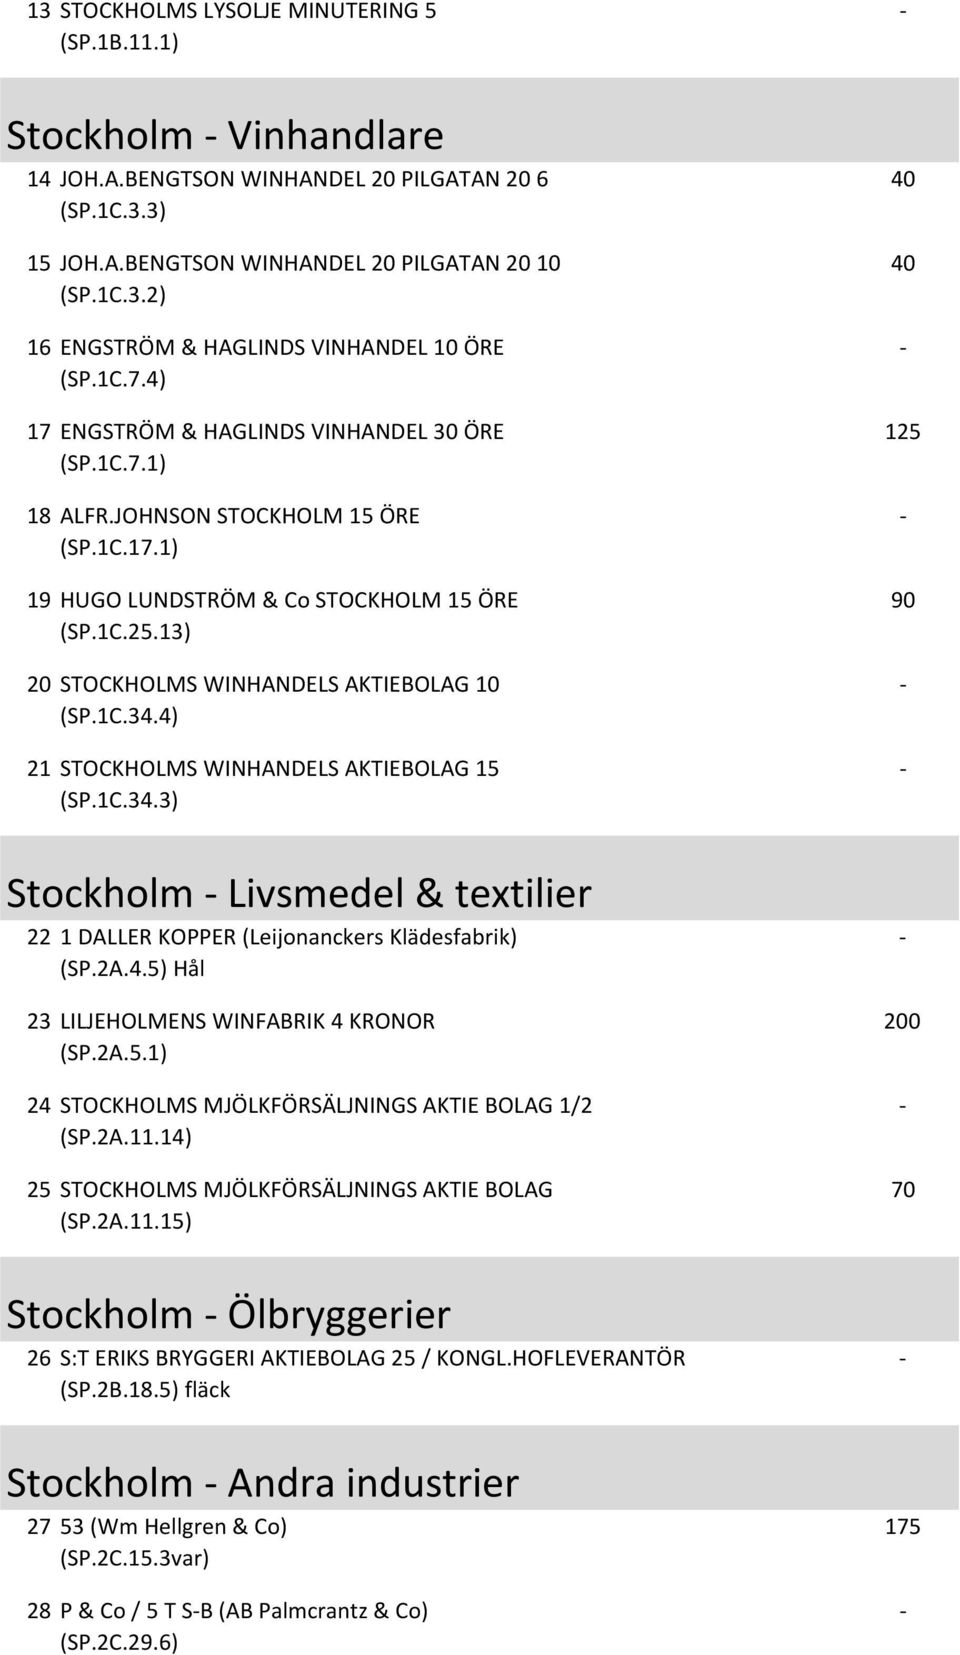 13) 20 STOCKHOLMS WINHANDELS AKTIEBOLAG 10 (SP.1C.34.4) 21 STOCKHOLMS WINHANDELS AKTIEBOLAG 15 (SP.1C.34.3) 40 40 Stockholm Livsmedel & textilier 22 1 DALLER KOPPER (Leijonanckers Klädesfabrik) (SP.